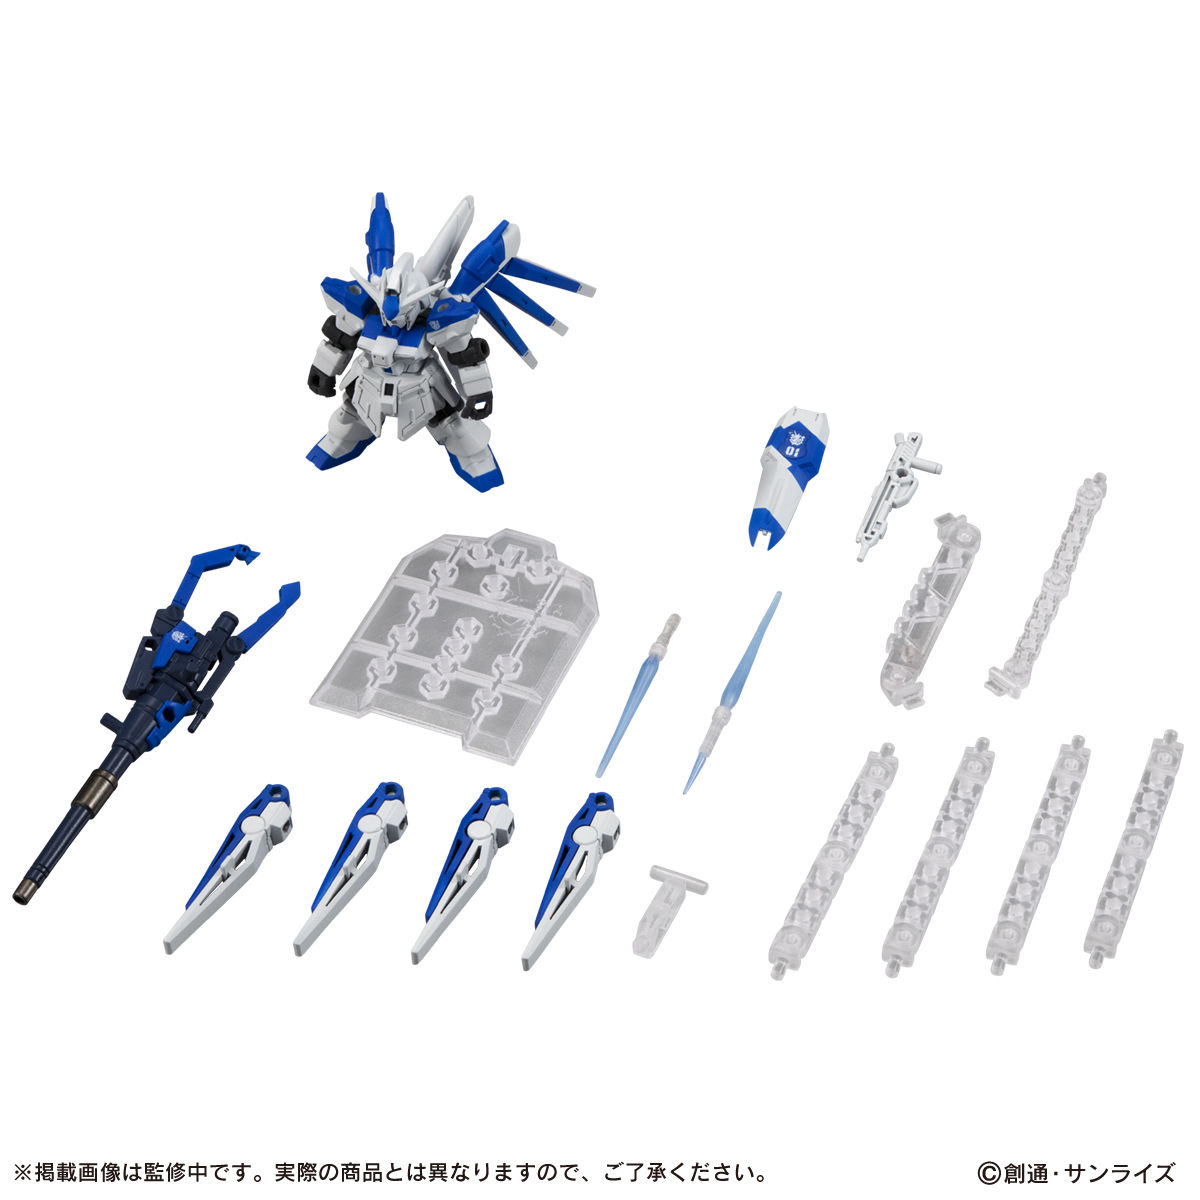 Gashapon Gundam Series: Gundam Mobile Suit Ensemble EX27 RX-93-ν2 Hi-ν Gundam set